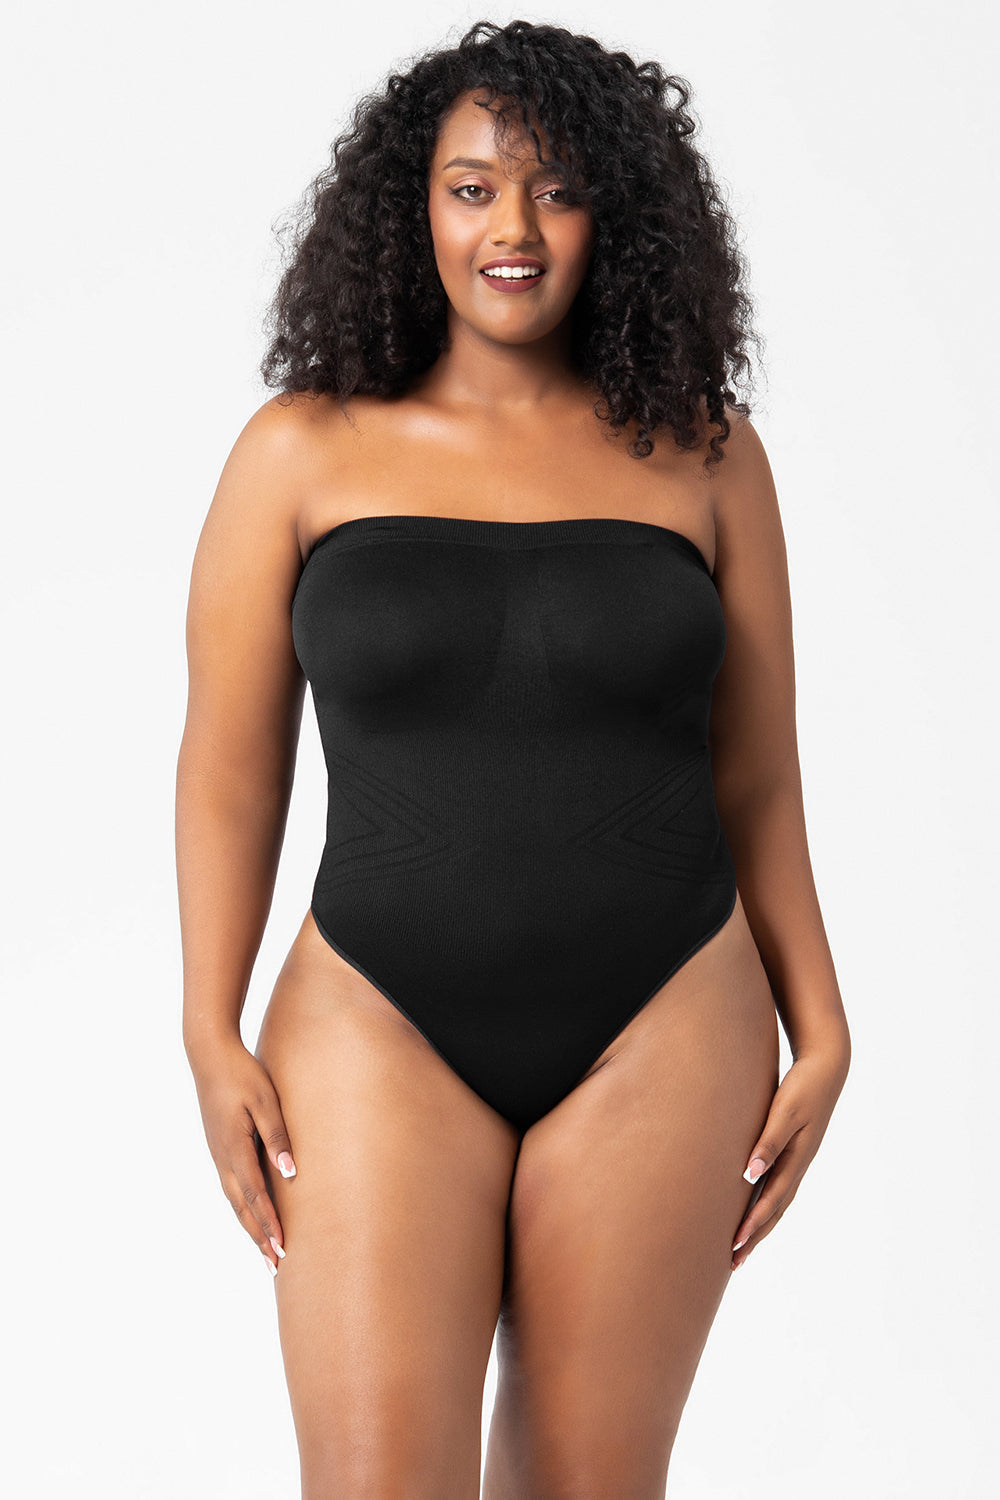 HOMETA Strapless Bodysuit for Women Tummy Control Shapewear